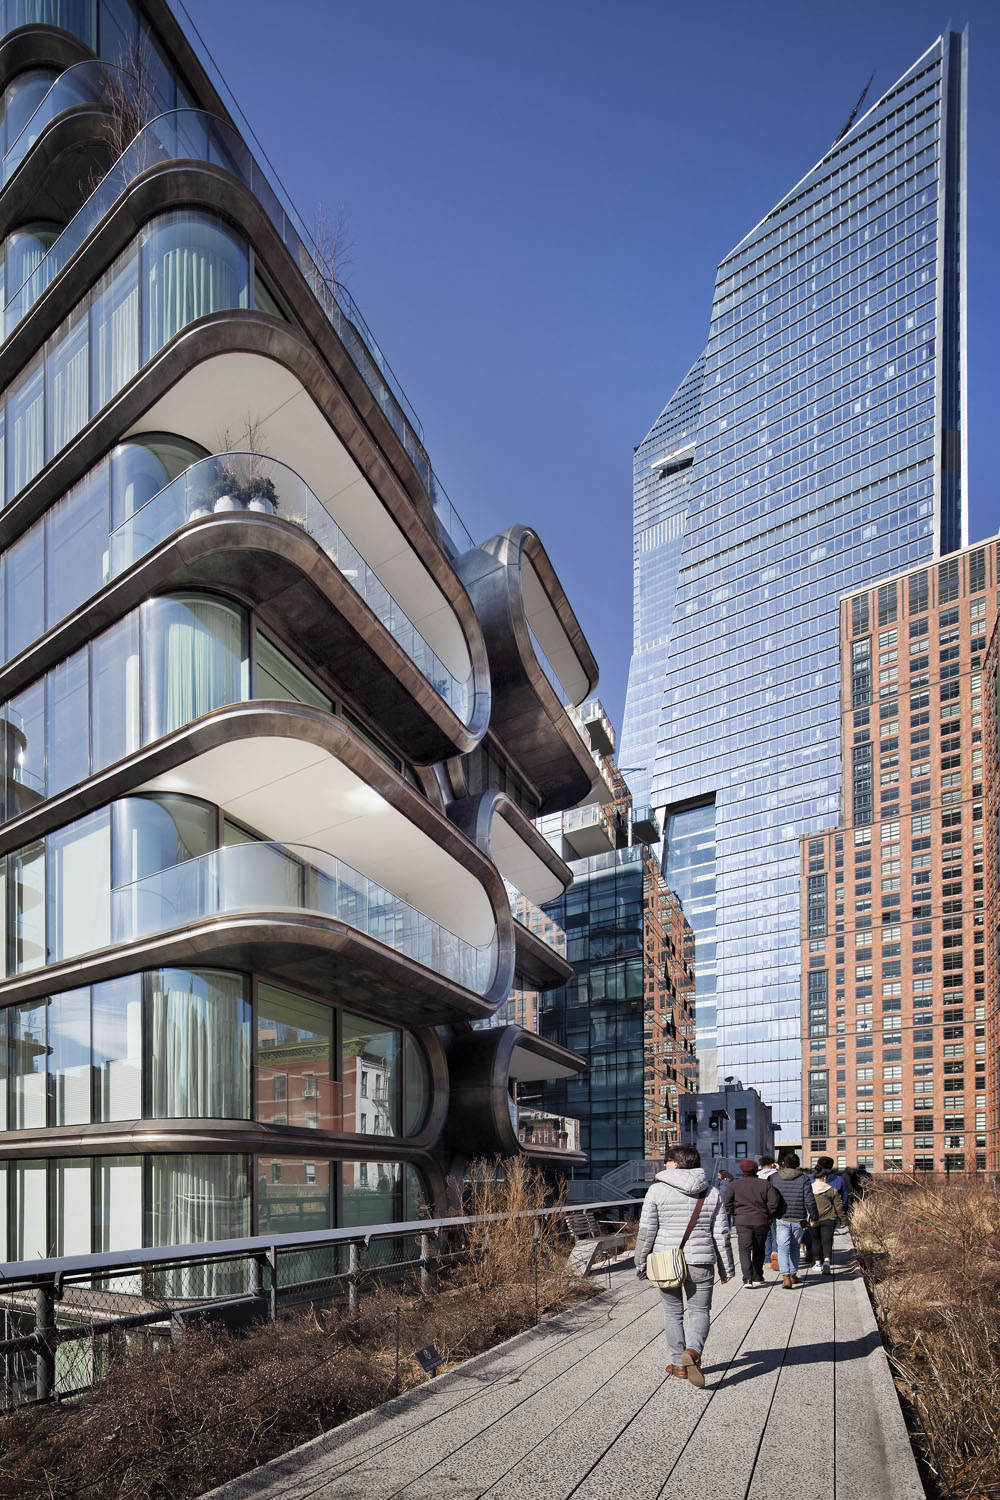  Kohn Pedersen Fox - KPF's new Manhattan development, Hudson Yards including 520 West 28th Street by Zaha Hadid. Shot from the High Line, Manhattan, New York City, USA. 